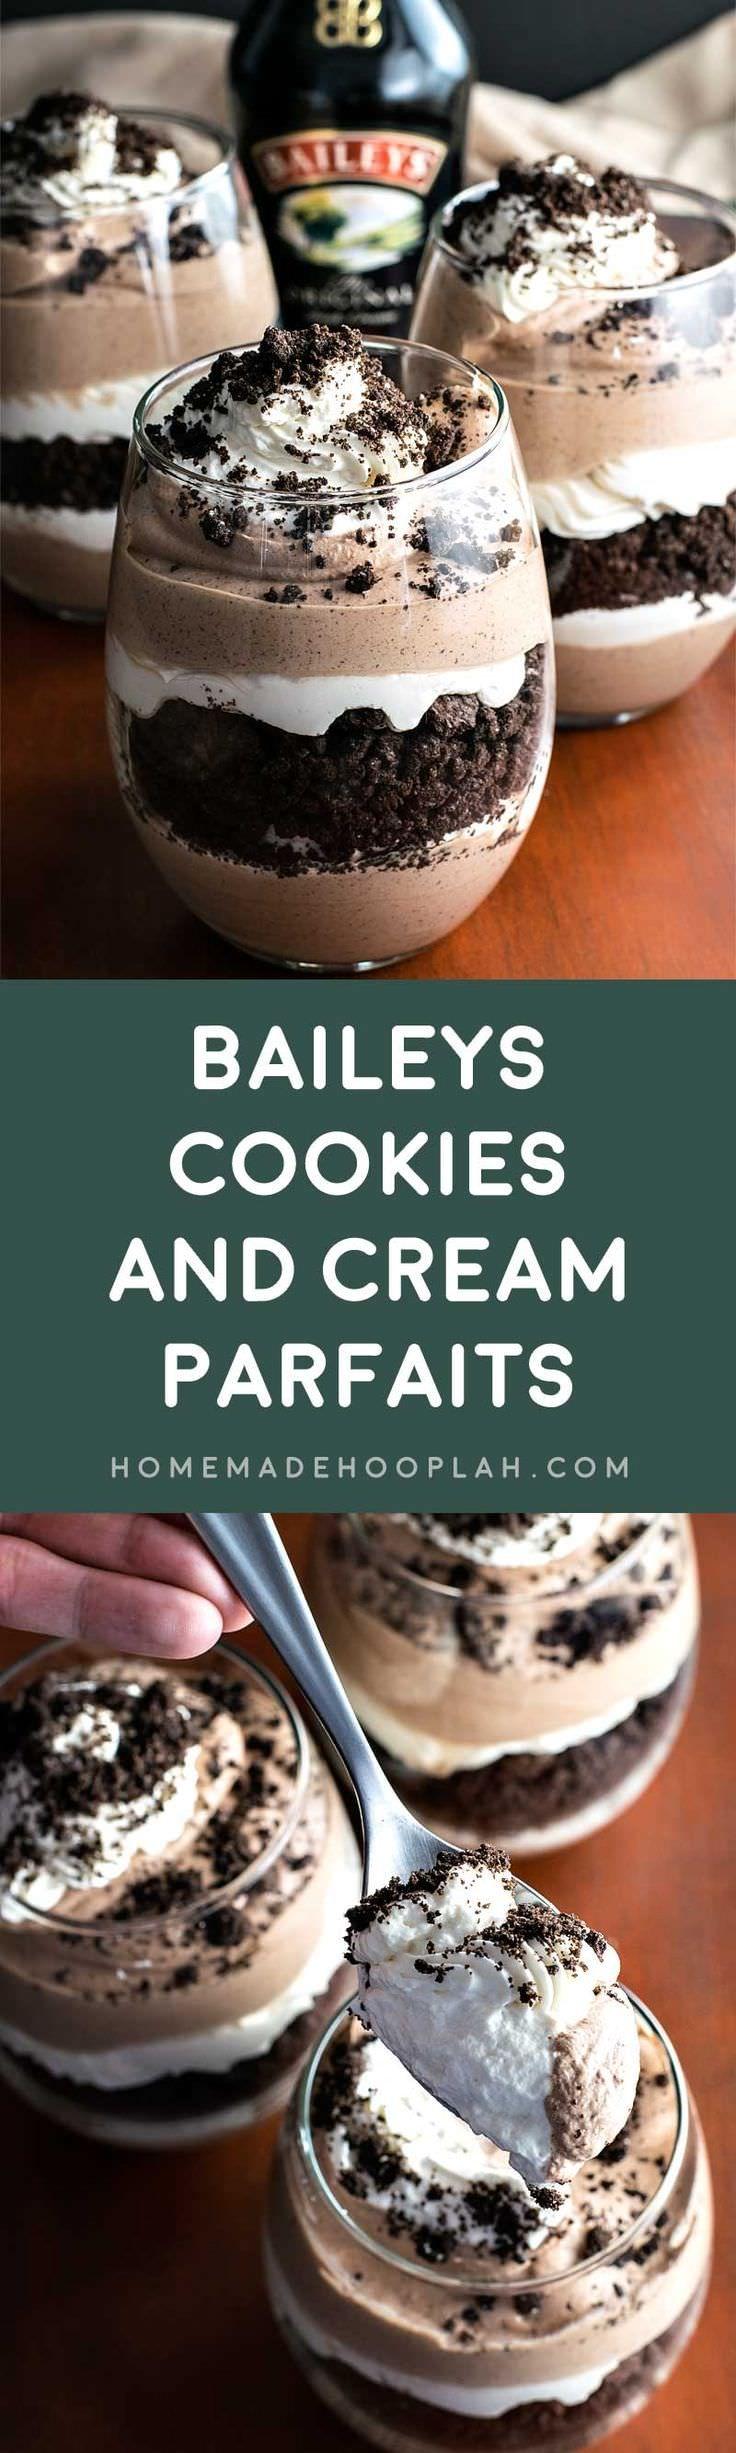 Wedding - Baileys Cookies And Cream Parfaits